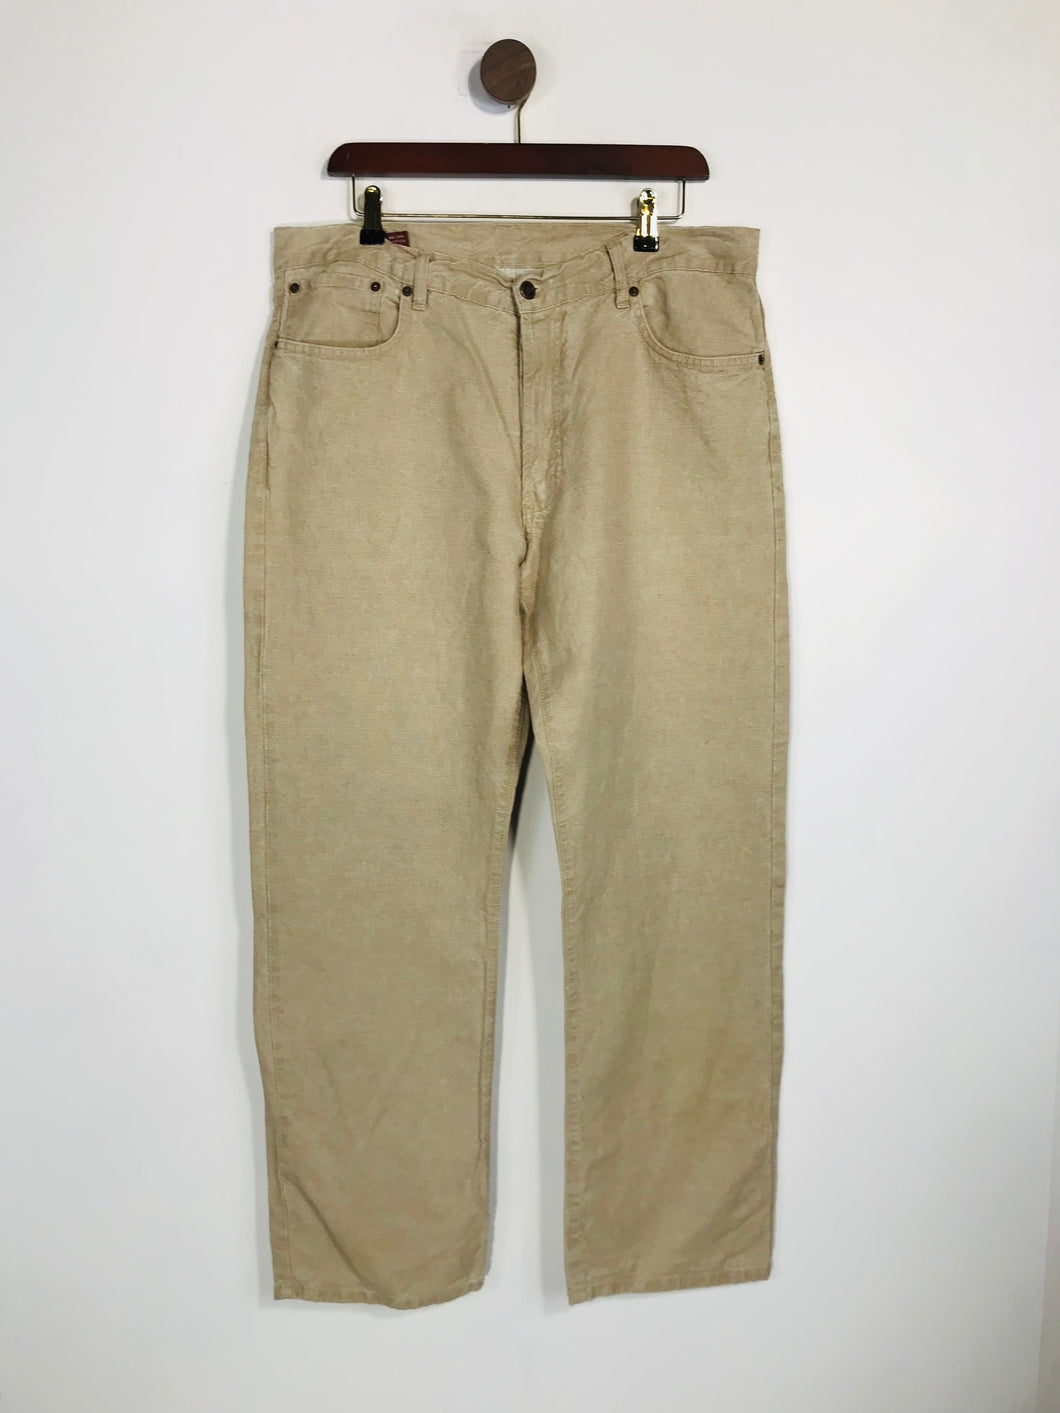 Marlboro Classics Men's Linen Chinos Trousers | W36 L32 | Beige